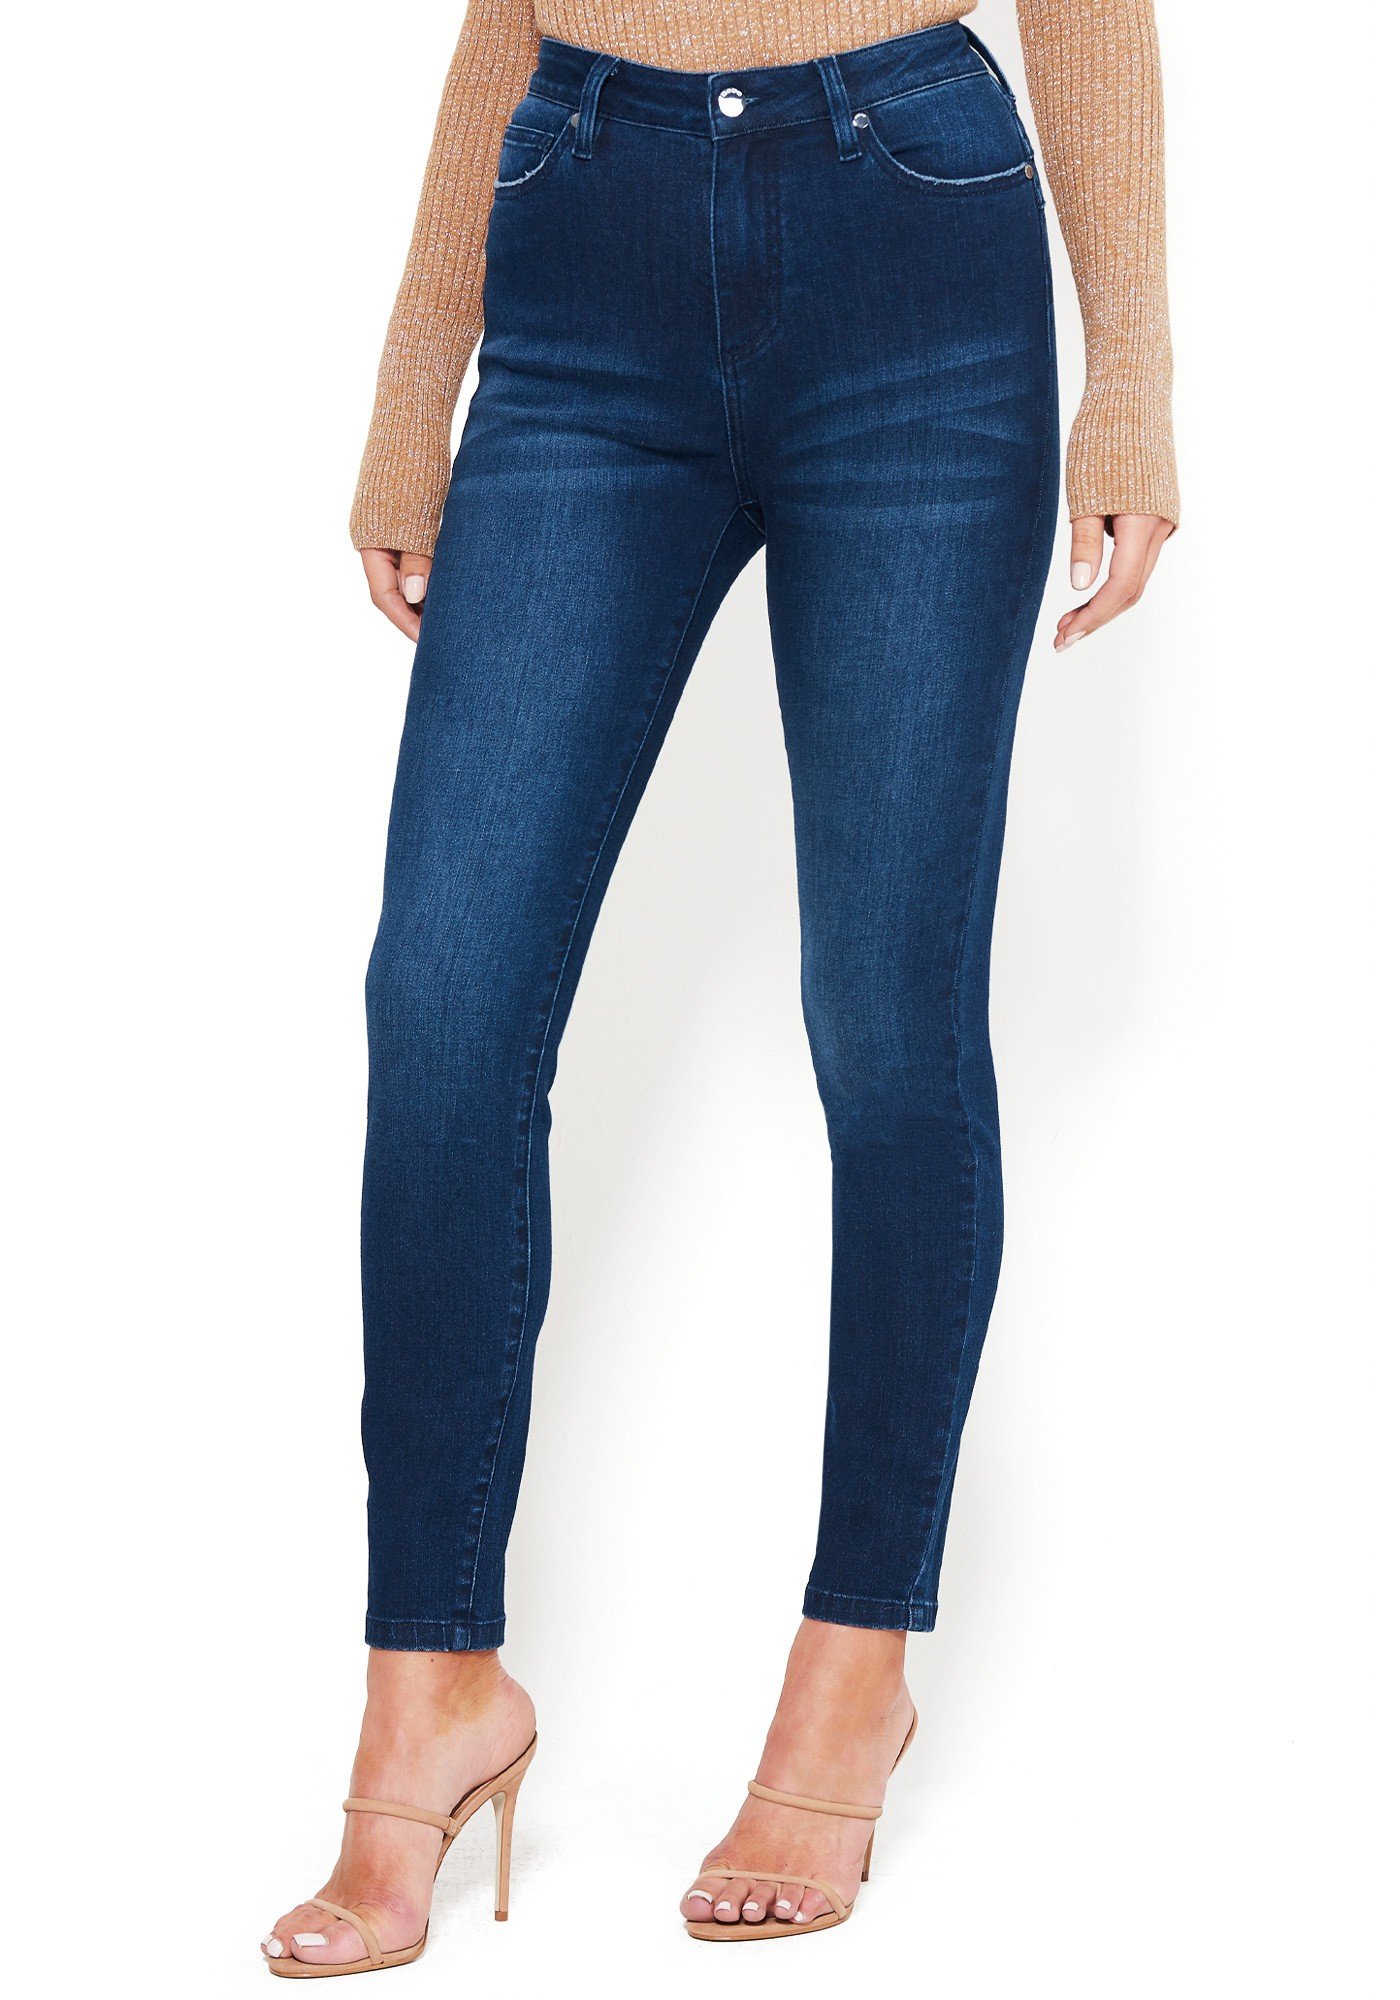 Bebe Women's Back V-Stitch Skinny Jeans, Size 27 in Indigo Cotton/Spandex